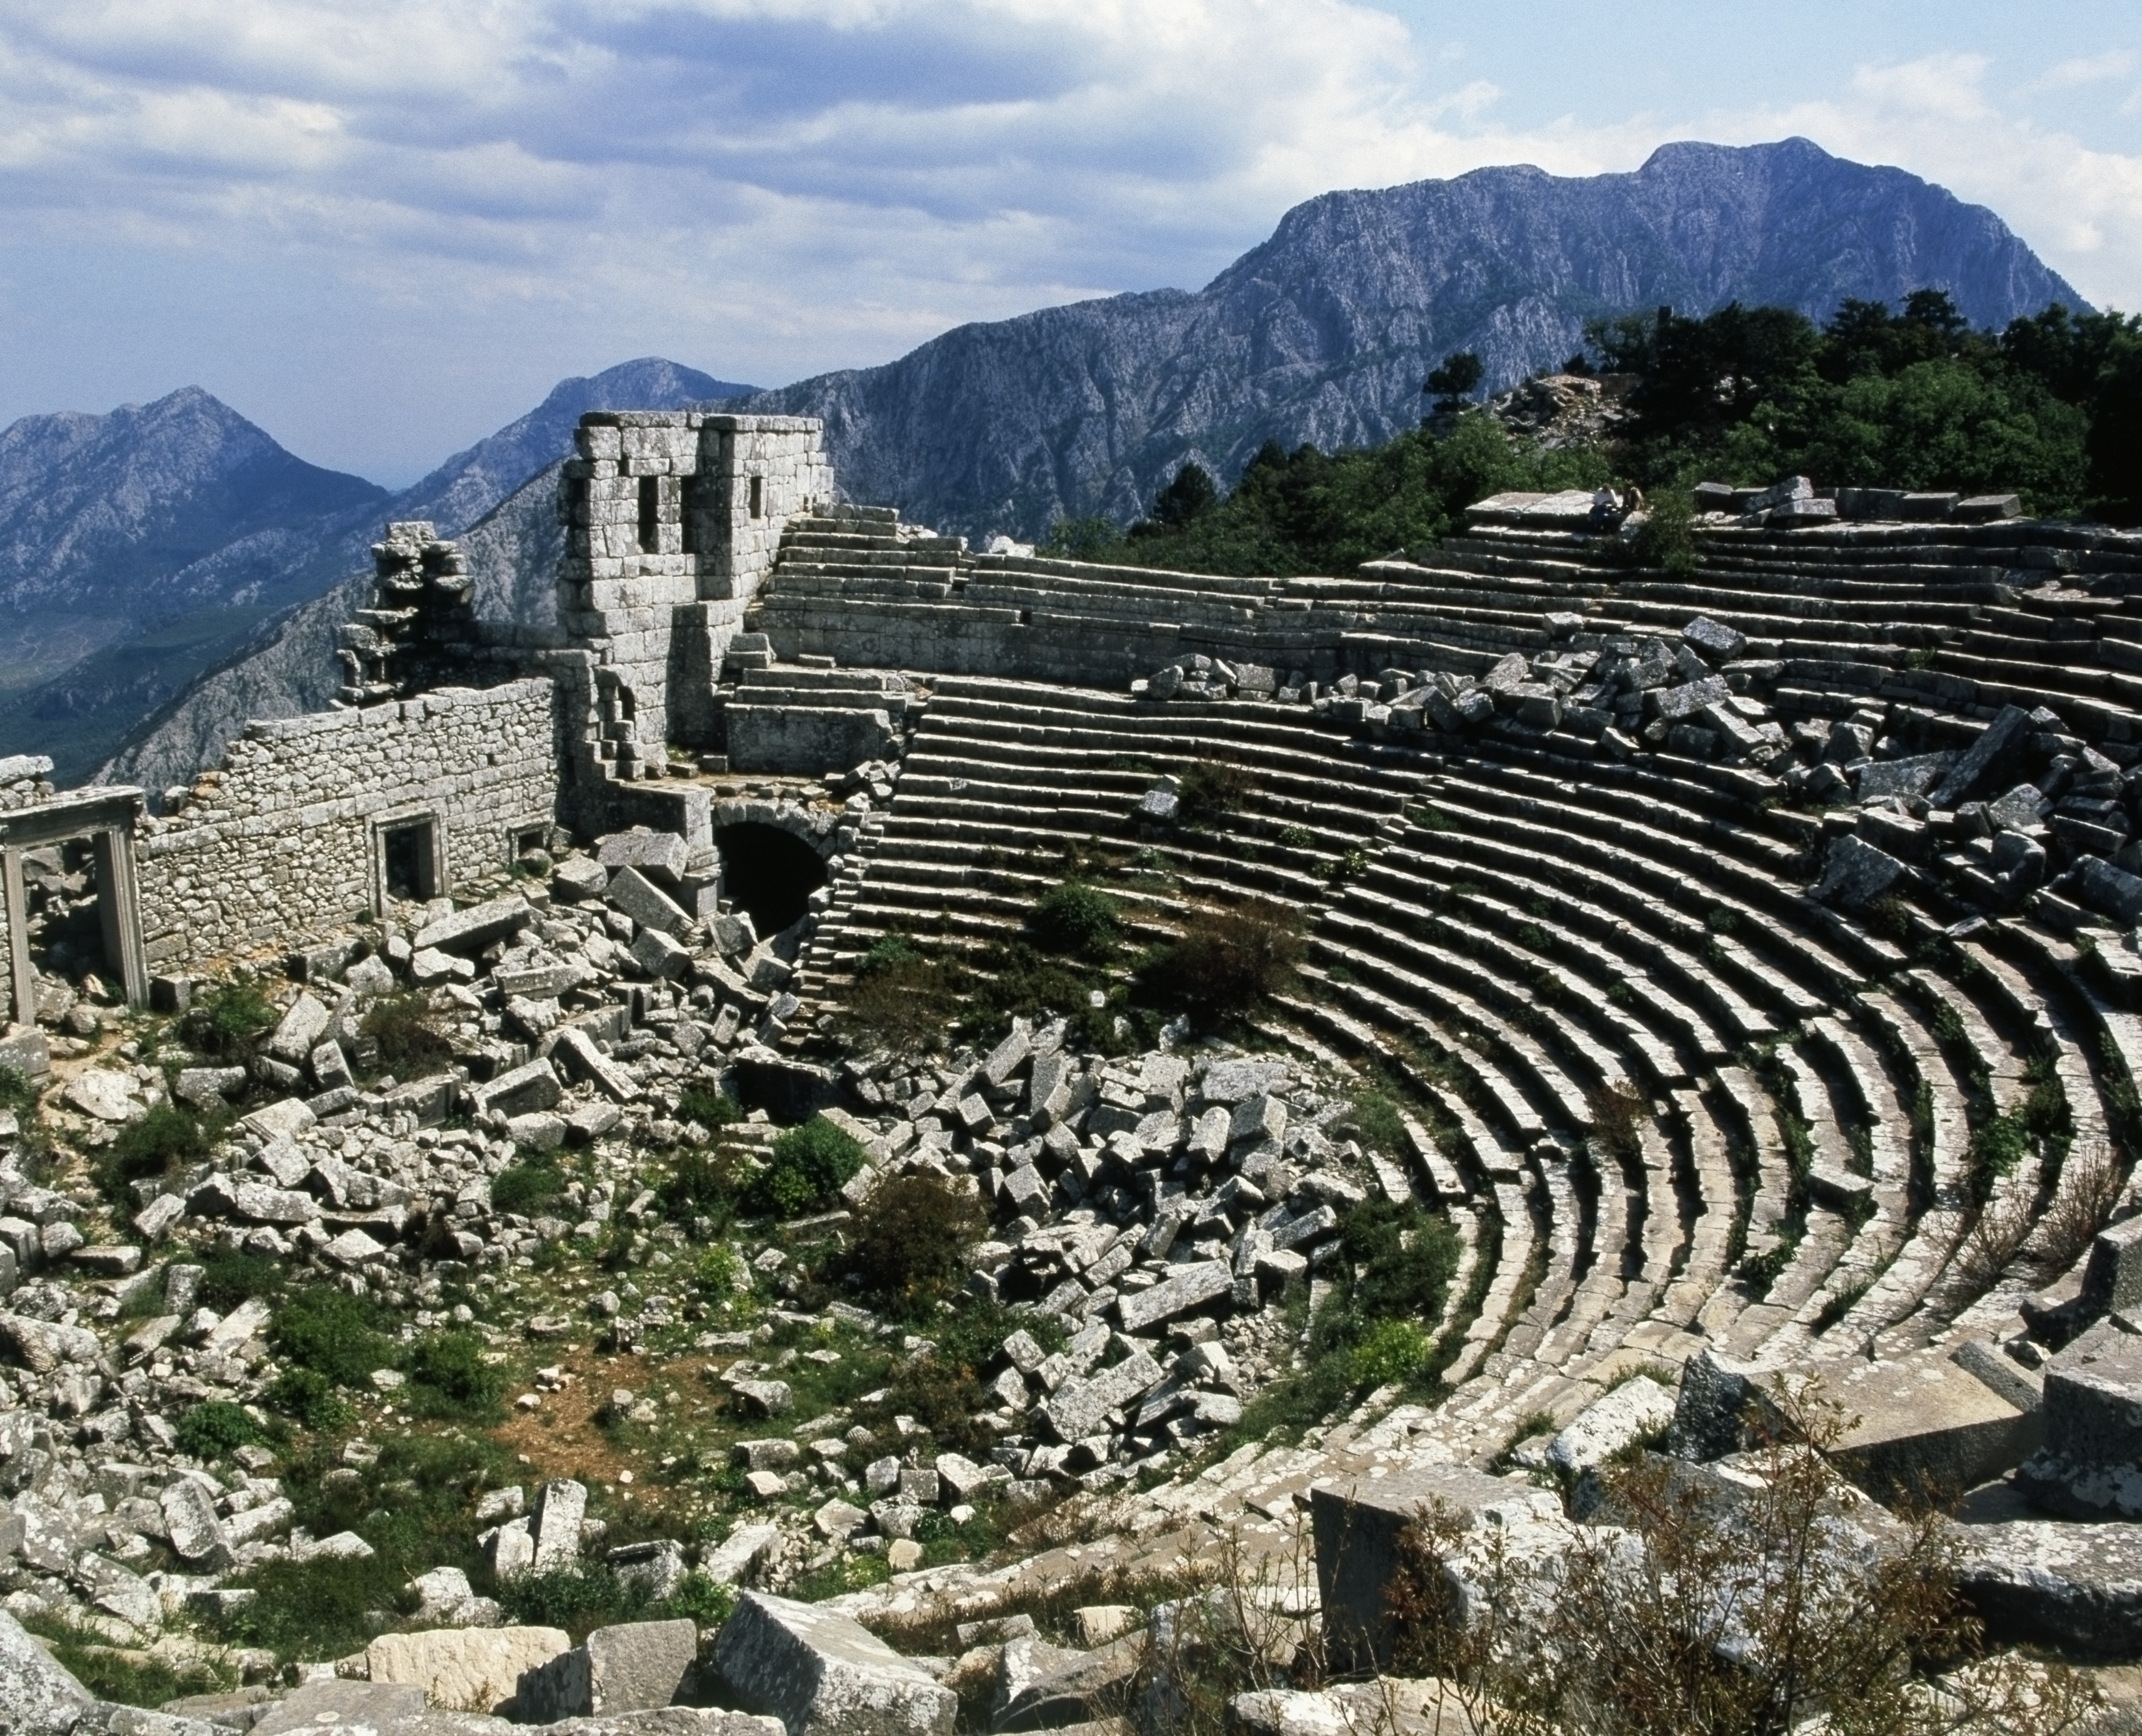 View of the Greek theatre of Termessos in Gullukdagi National Park, Turkey on Jan. 1, 2003.